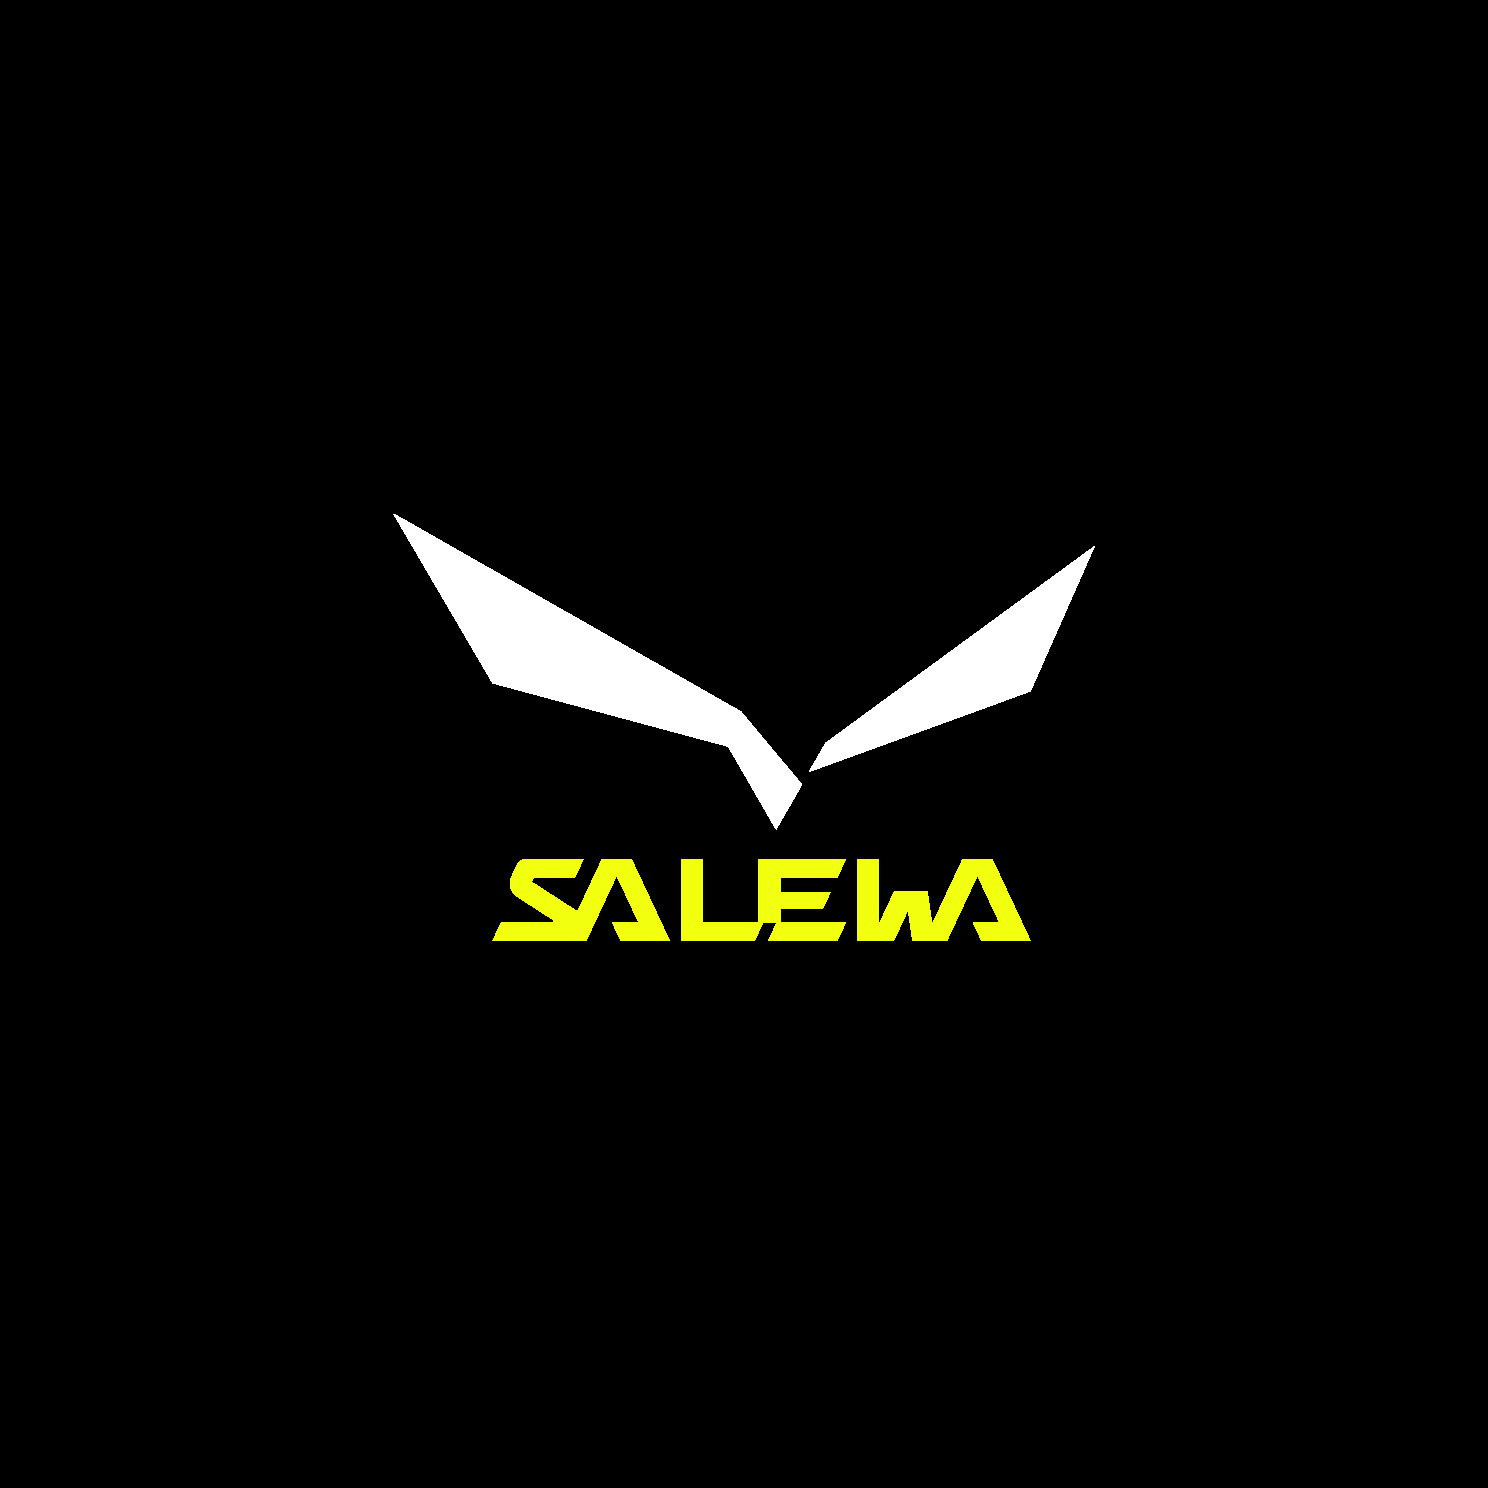 SALEWA patched squared CMYK 300dpi logo